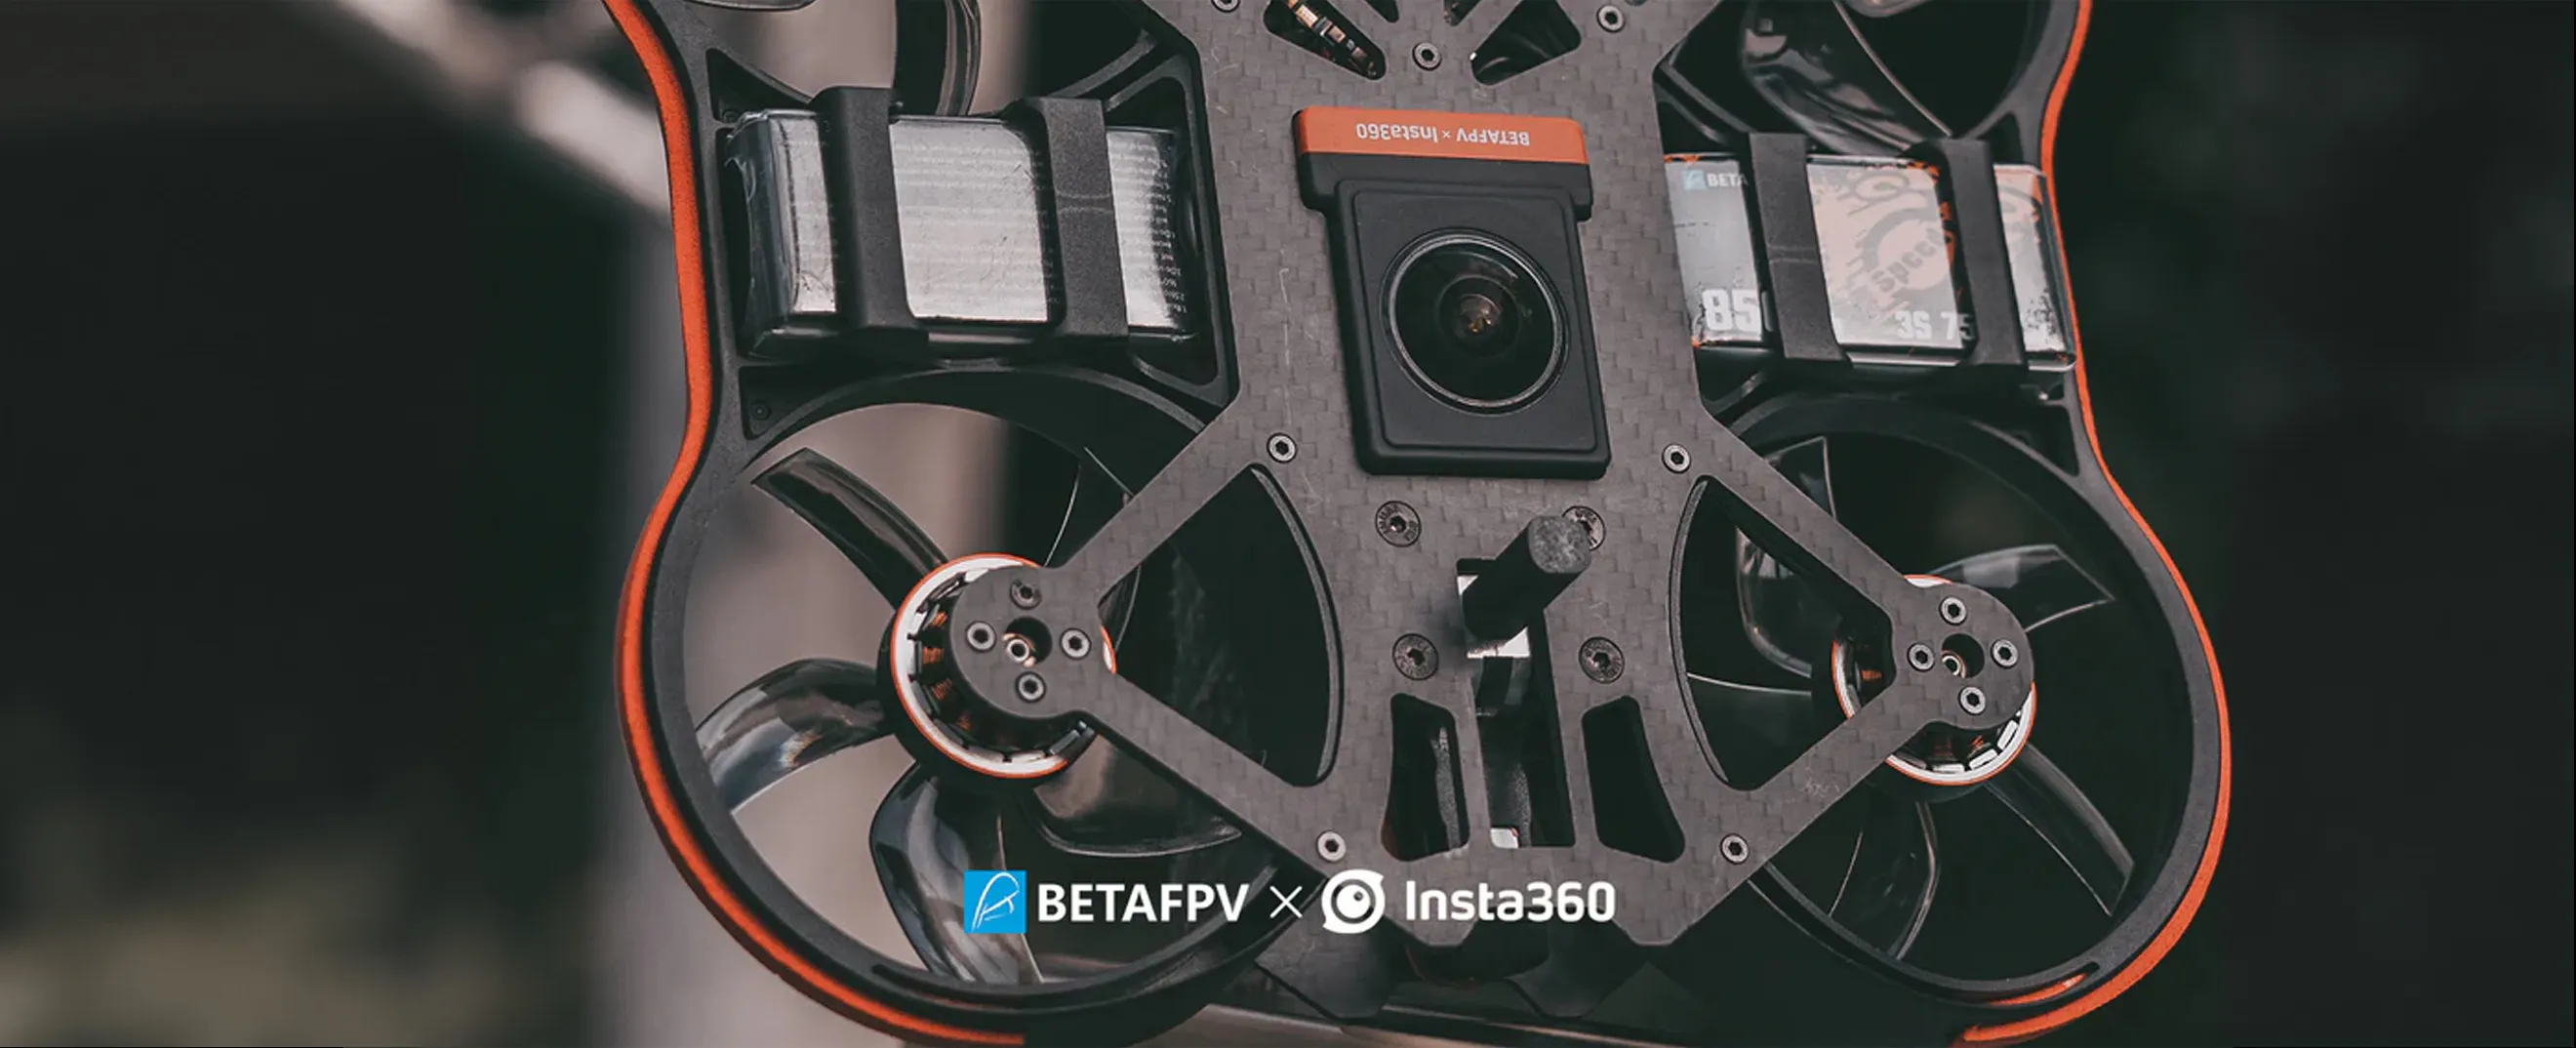 BetaFPV SMO 360 camera is designed for pavo360